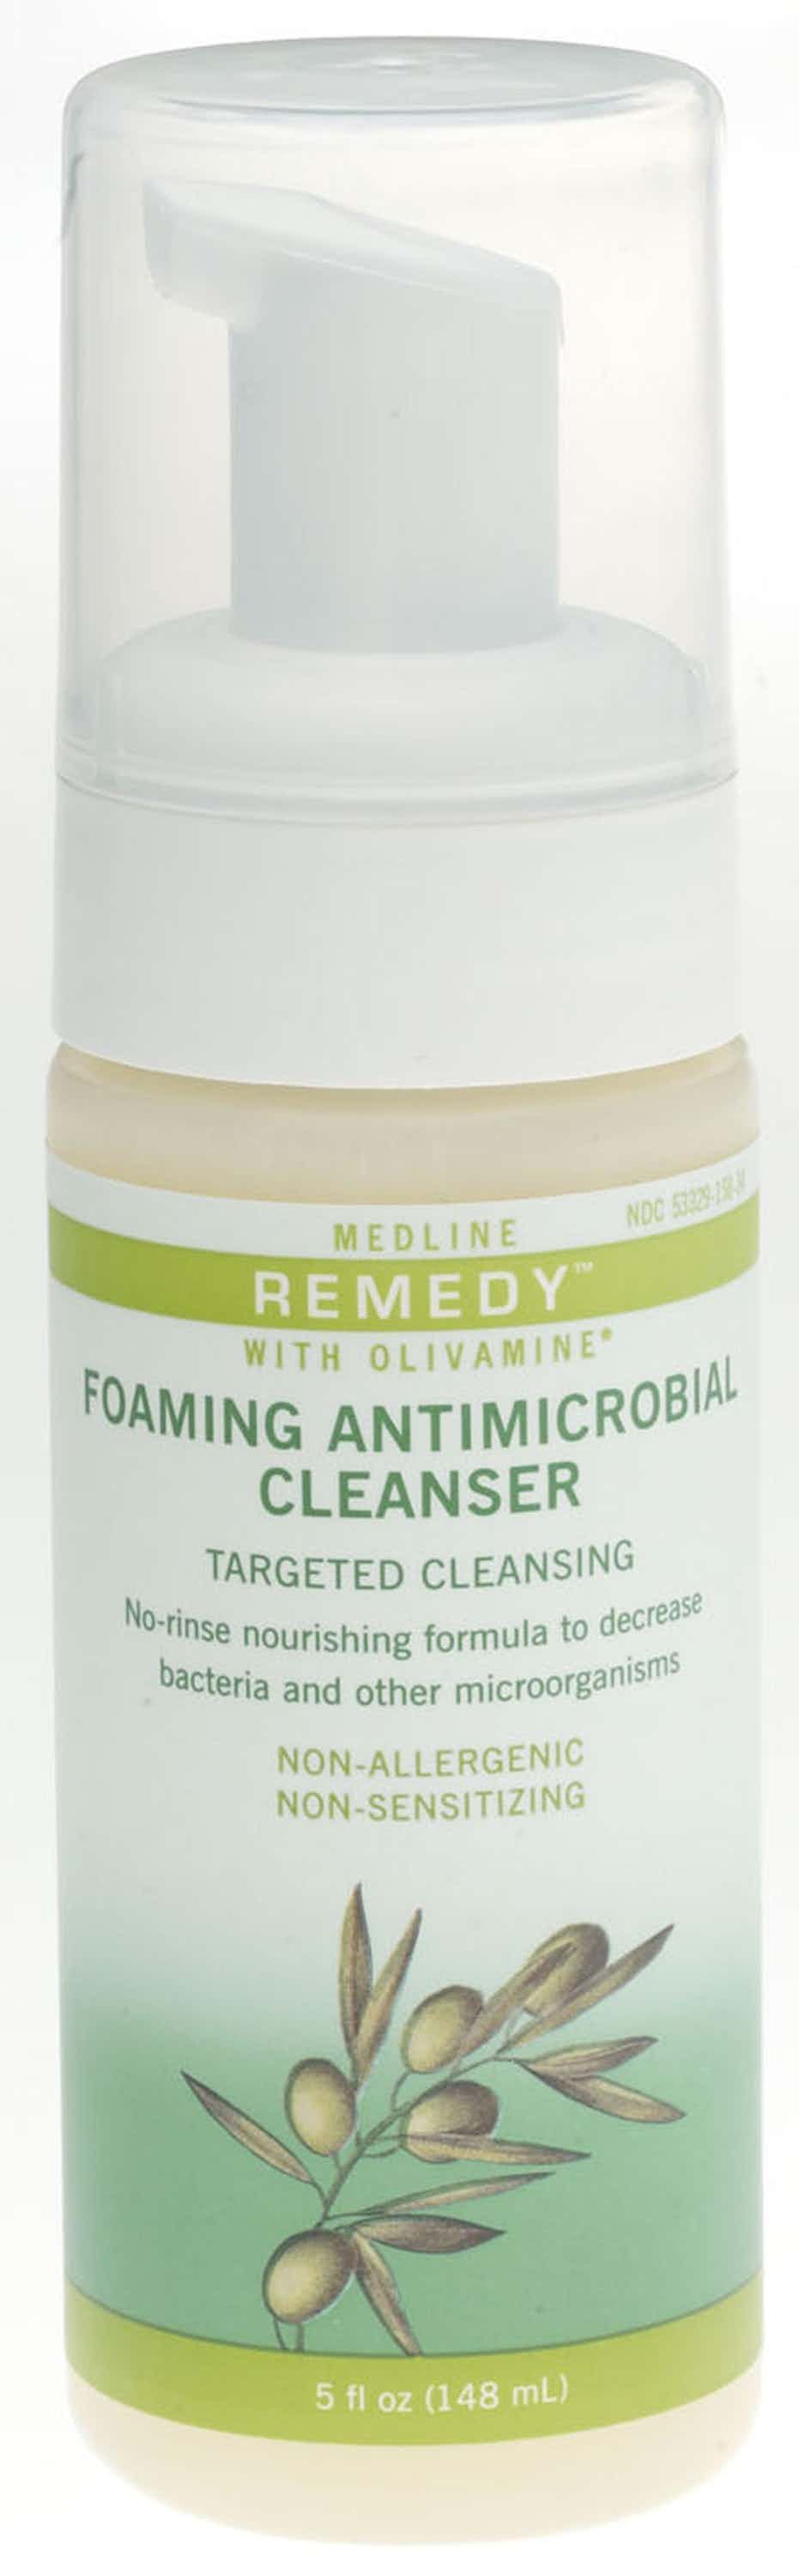 Remedy Olivamine Foaming Antimicrobial Cleanser, MSC094205FOAM, 5 oz. - Case of 12